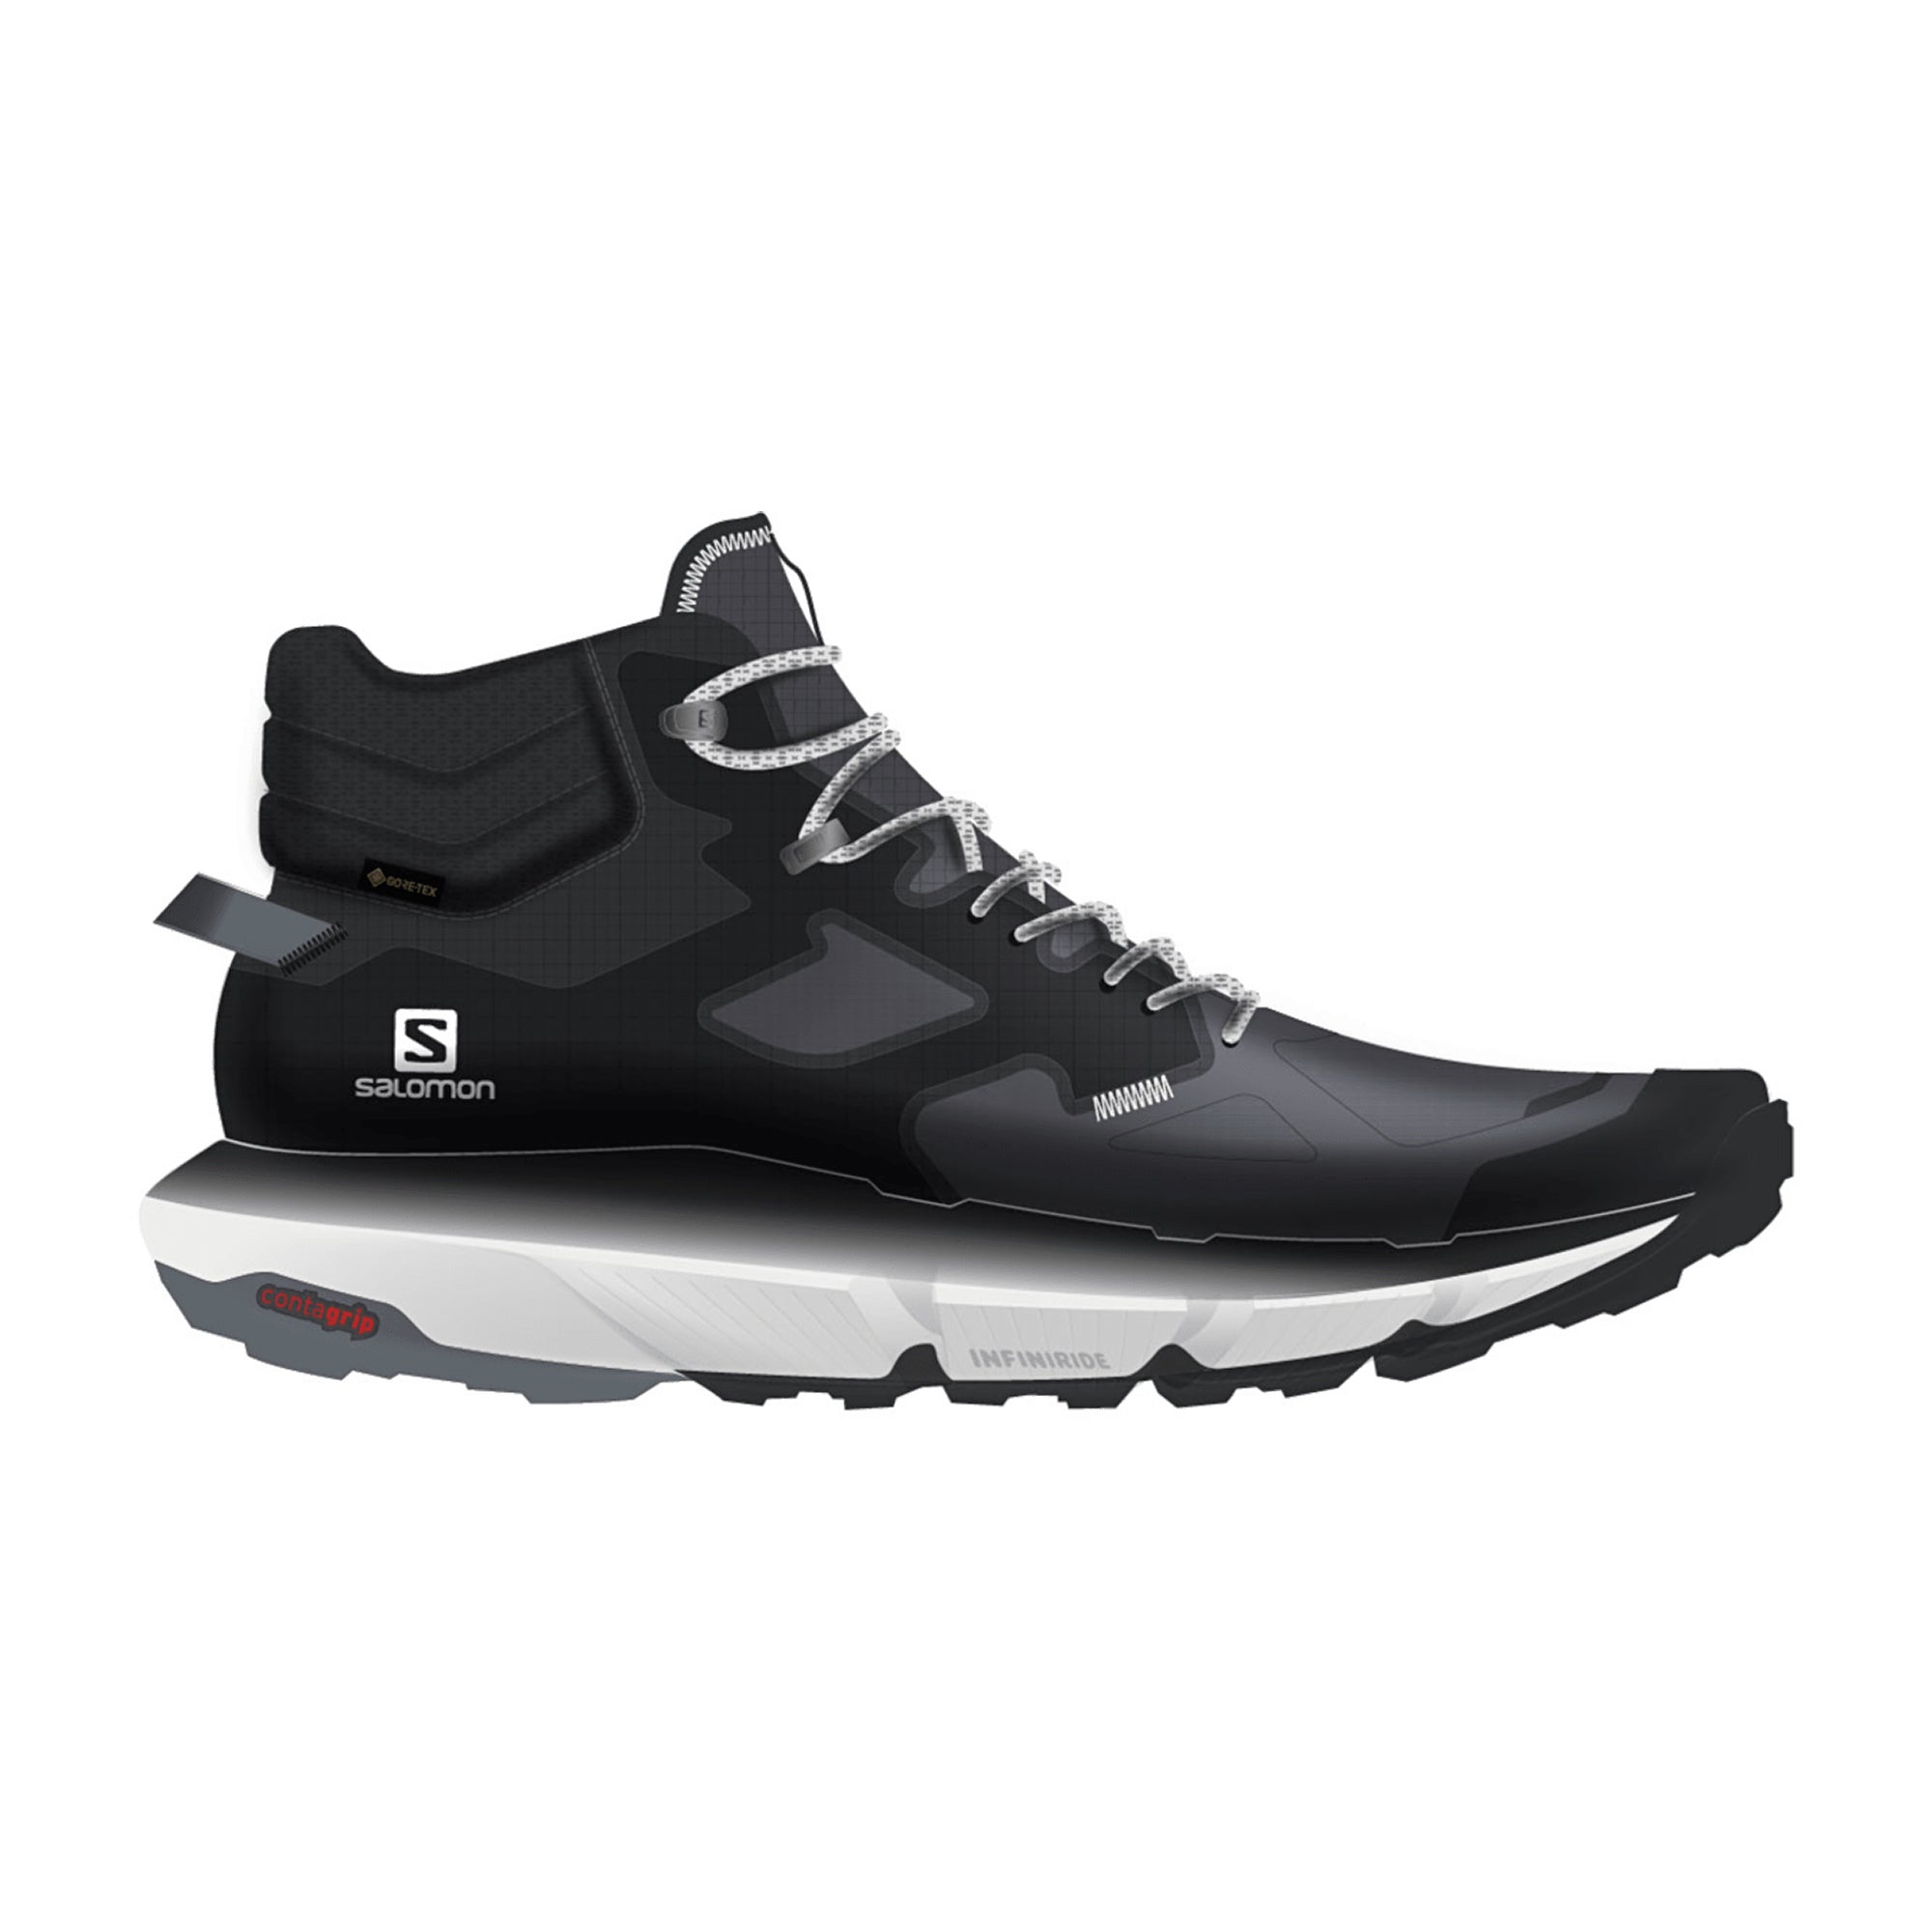 Salomon shoes PREDICT HIKE MID GTX Ebony/B for men, gray